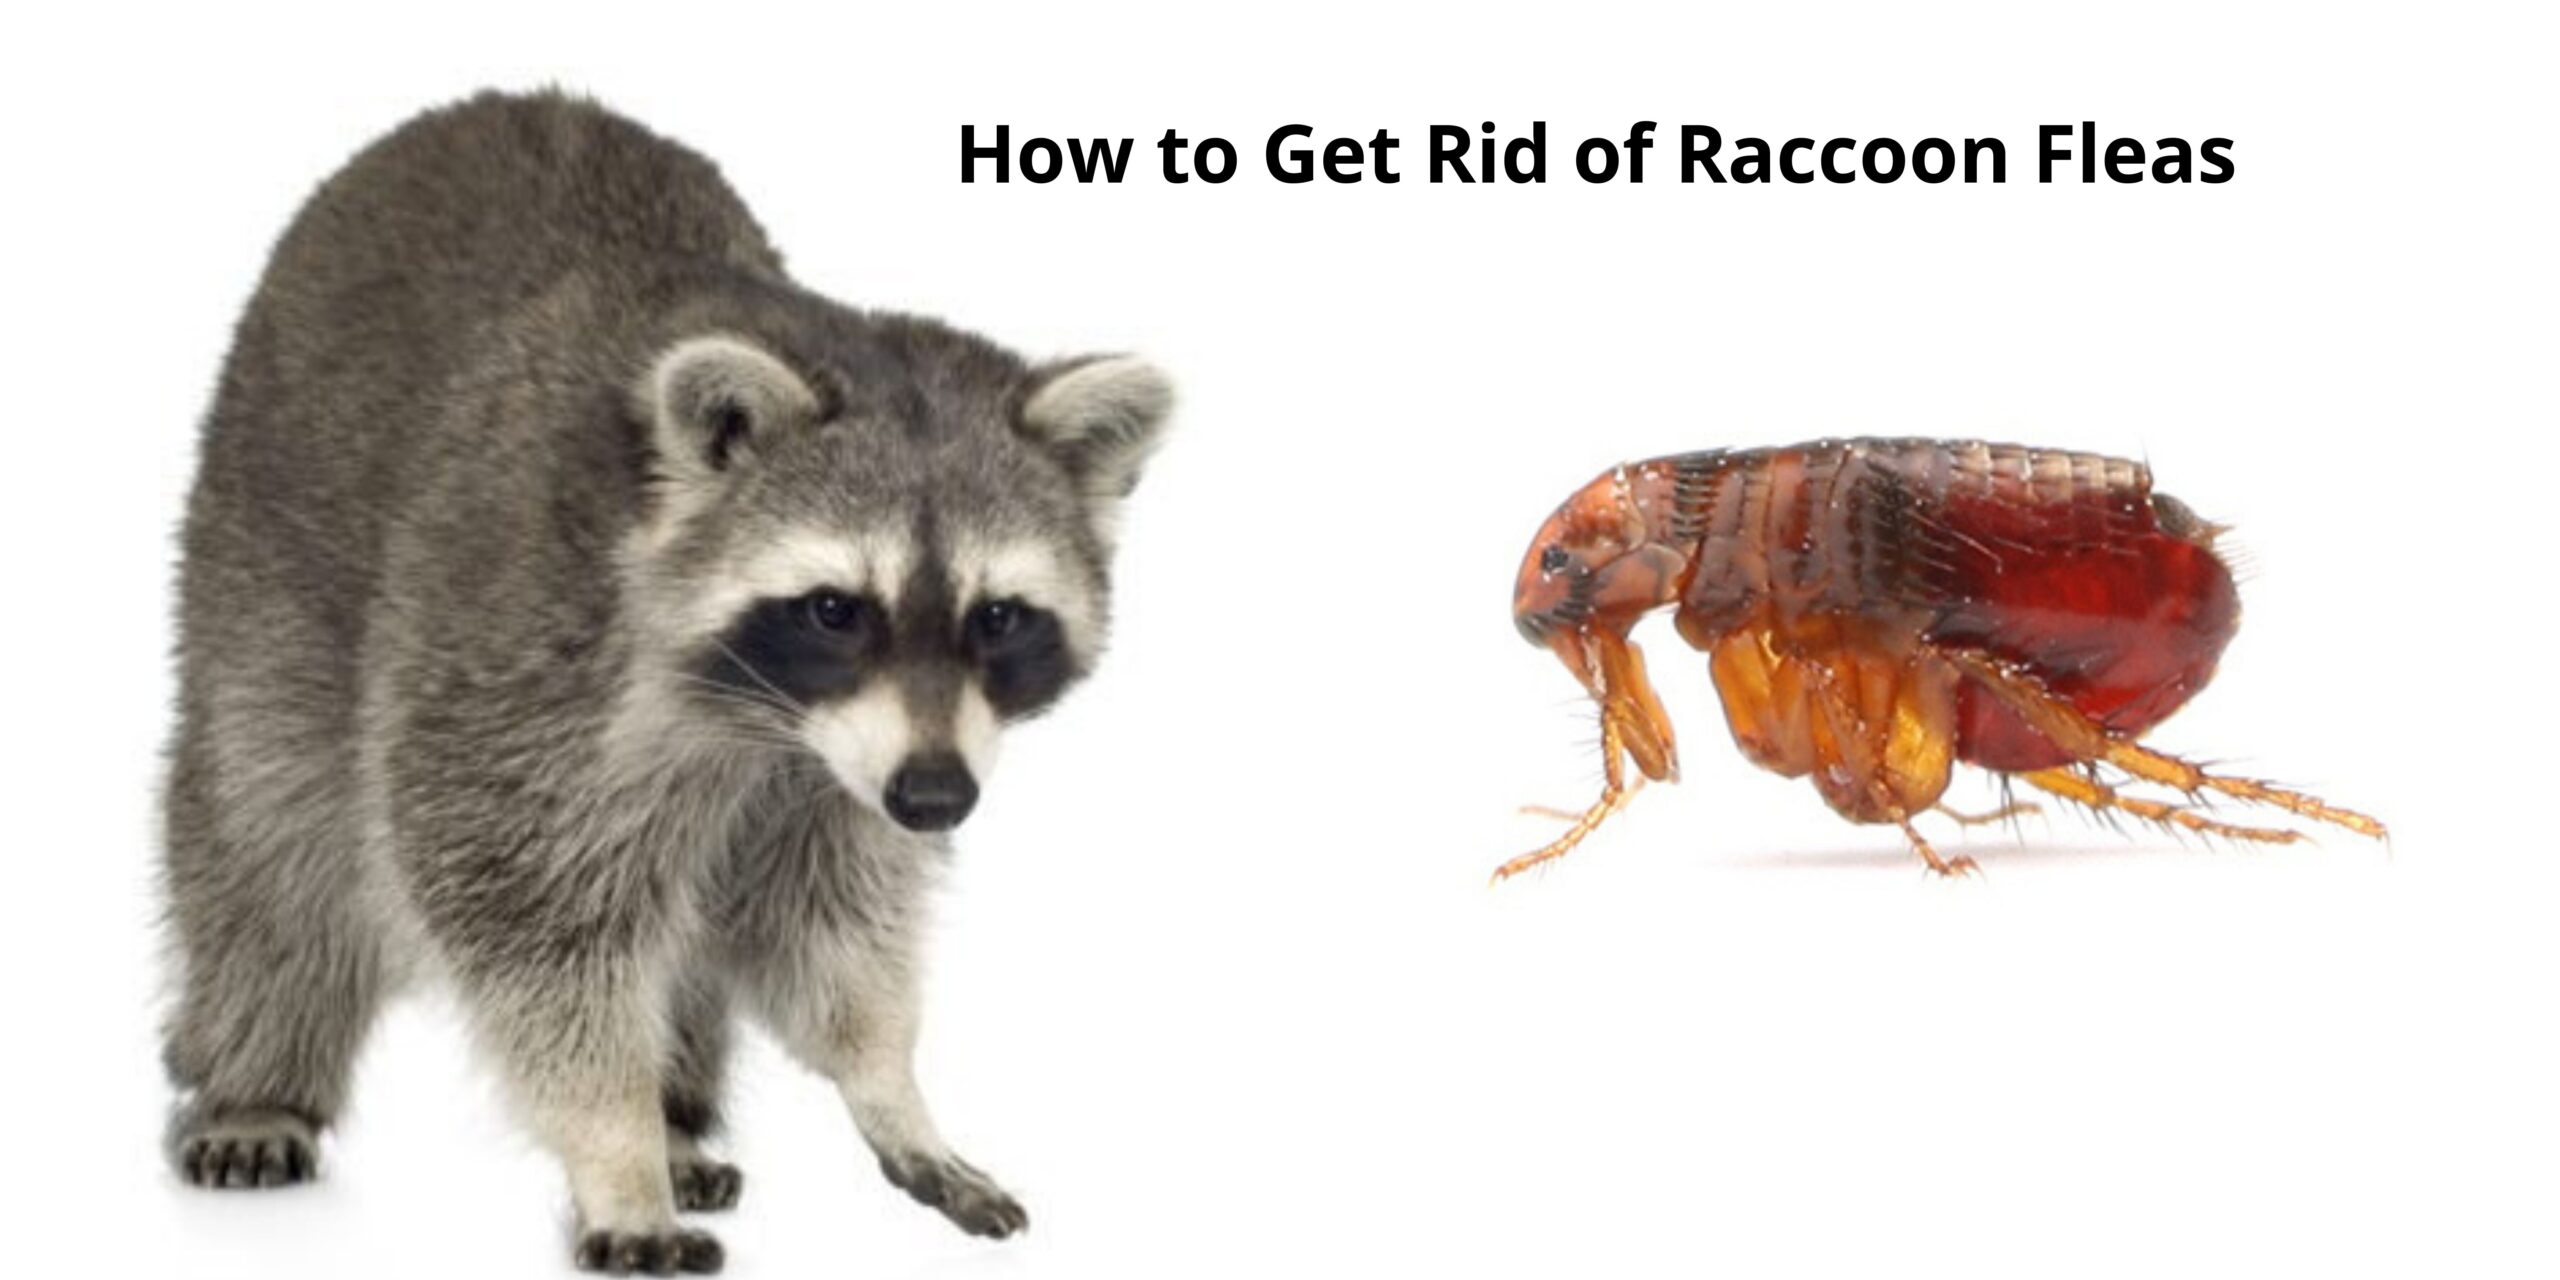 How to Get Rid of Raccoon Fleas